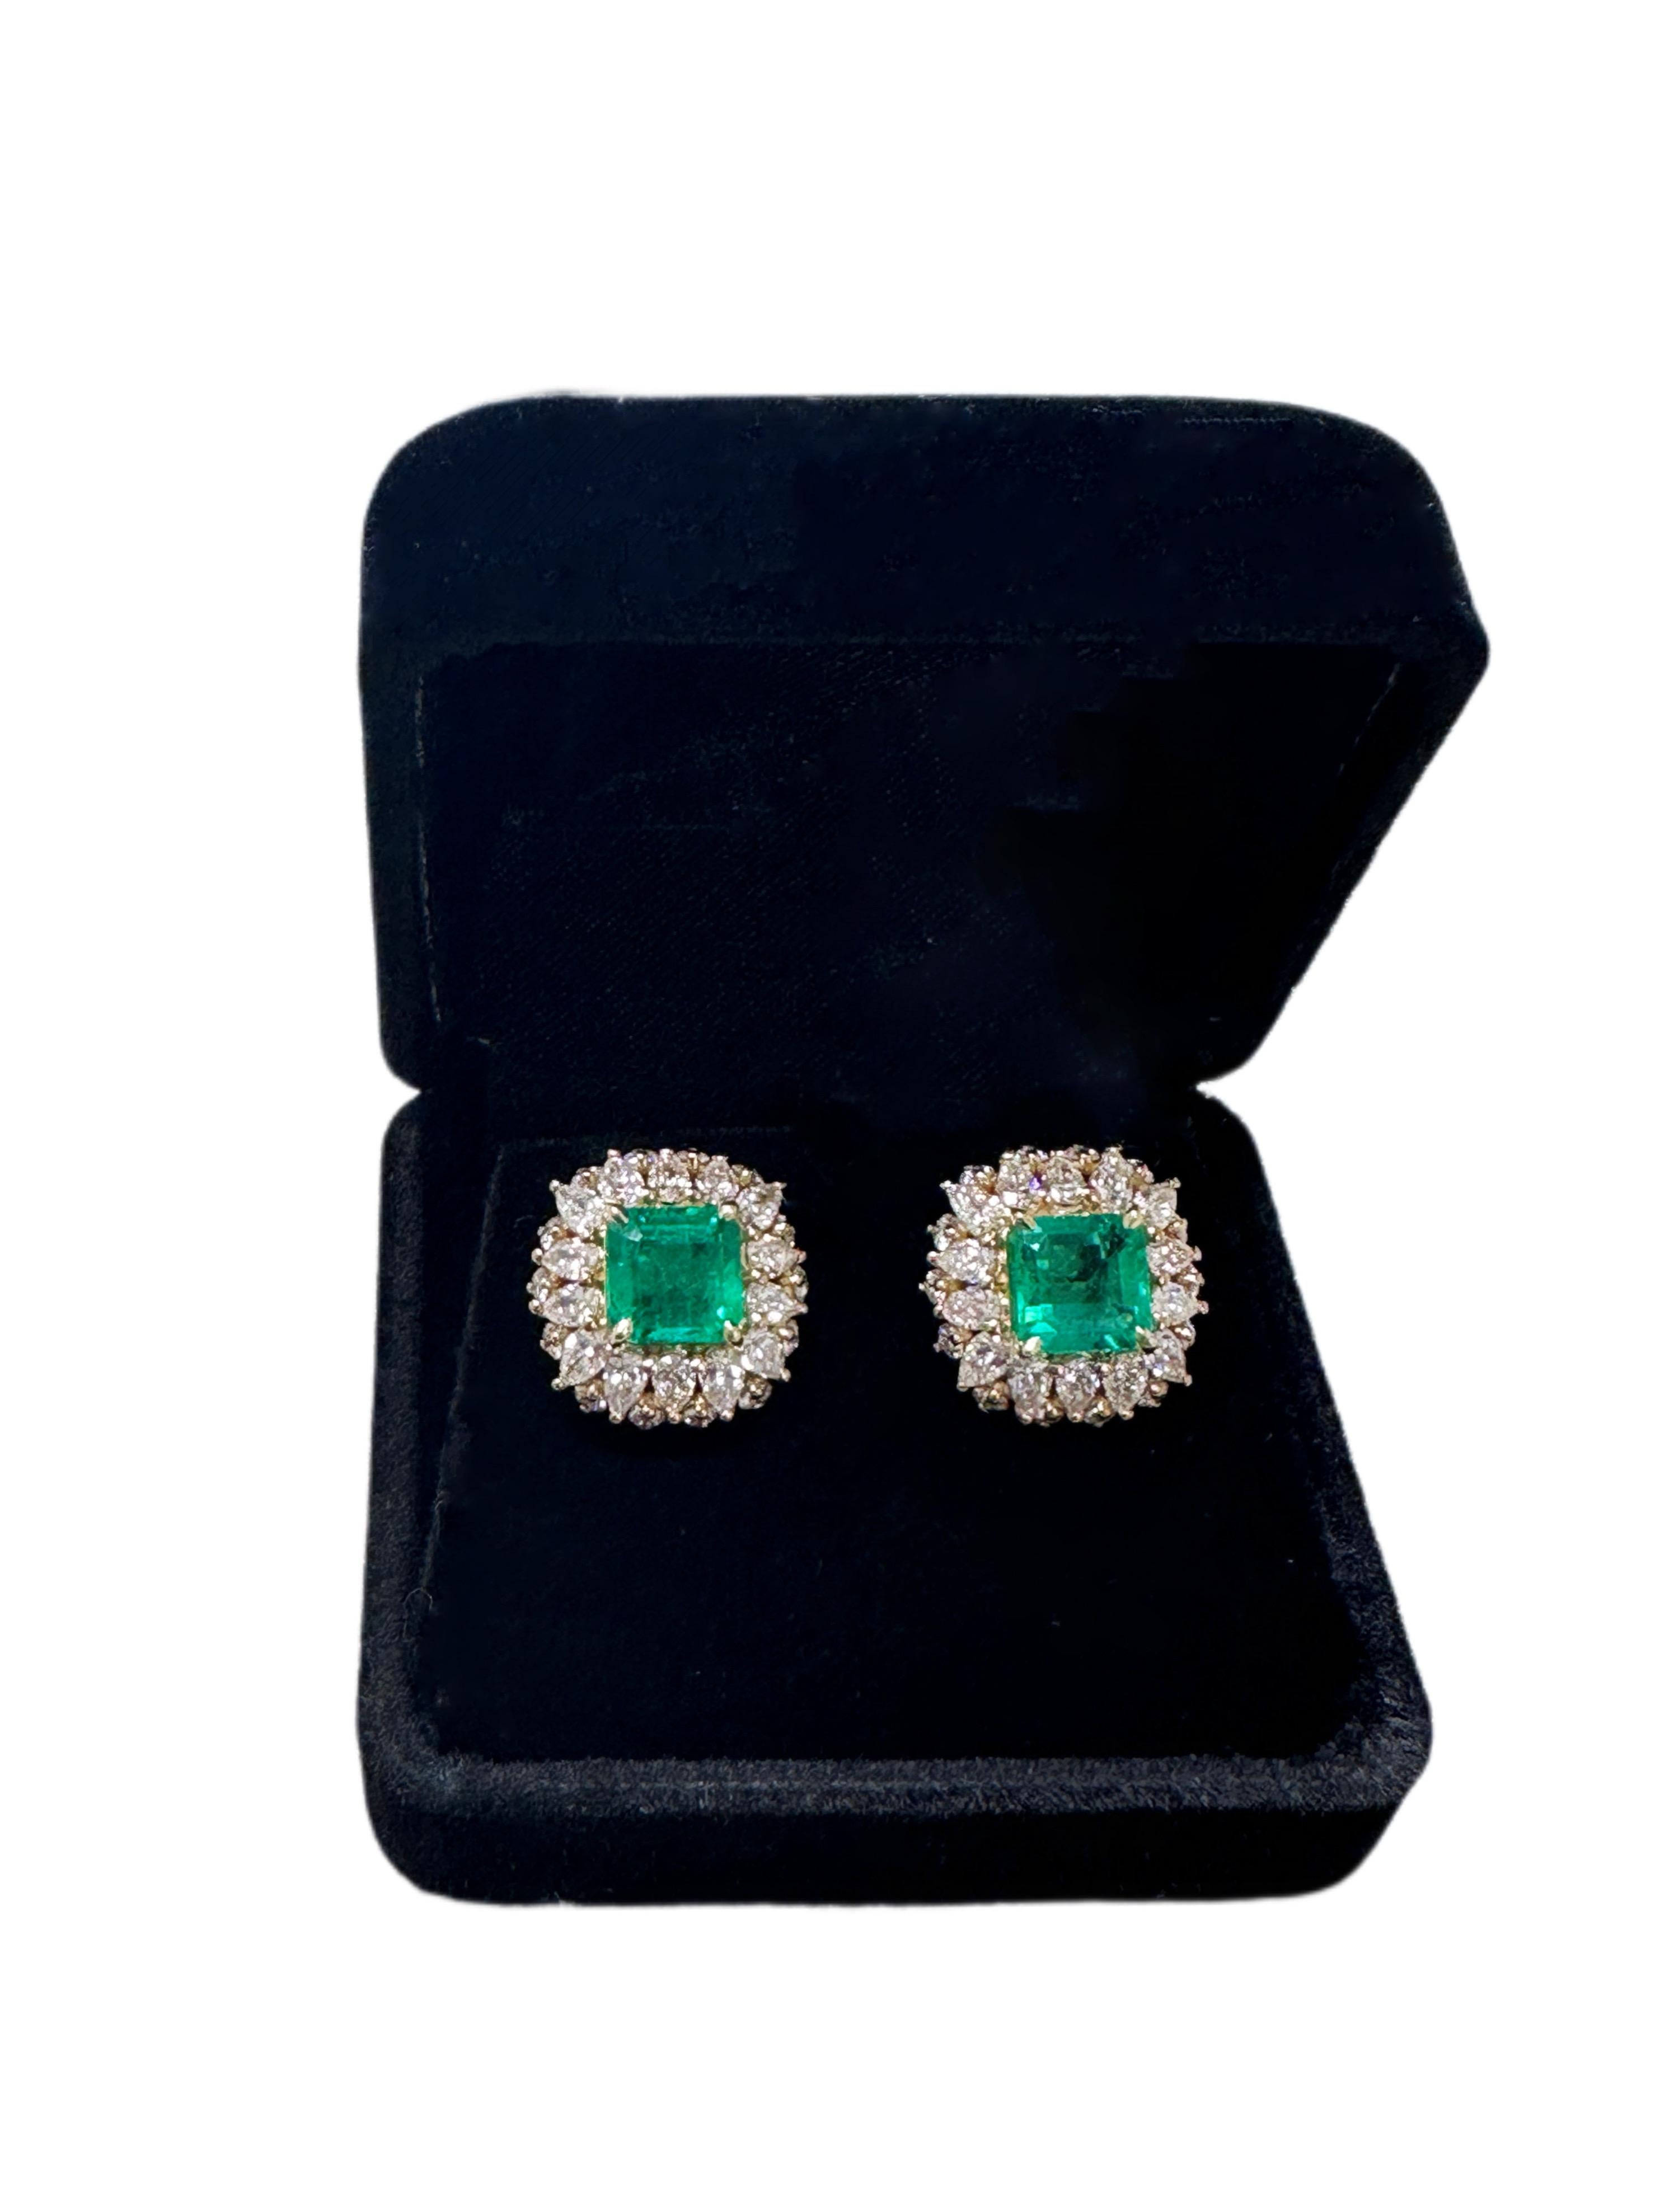 Round Diamonds: 0.58ct
Pear Shape Diamonds: 1.60ct
Center Stone: Emerald : 1.65ct